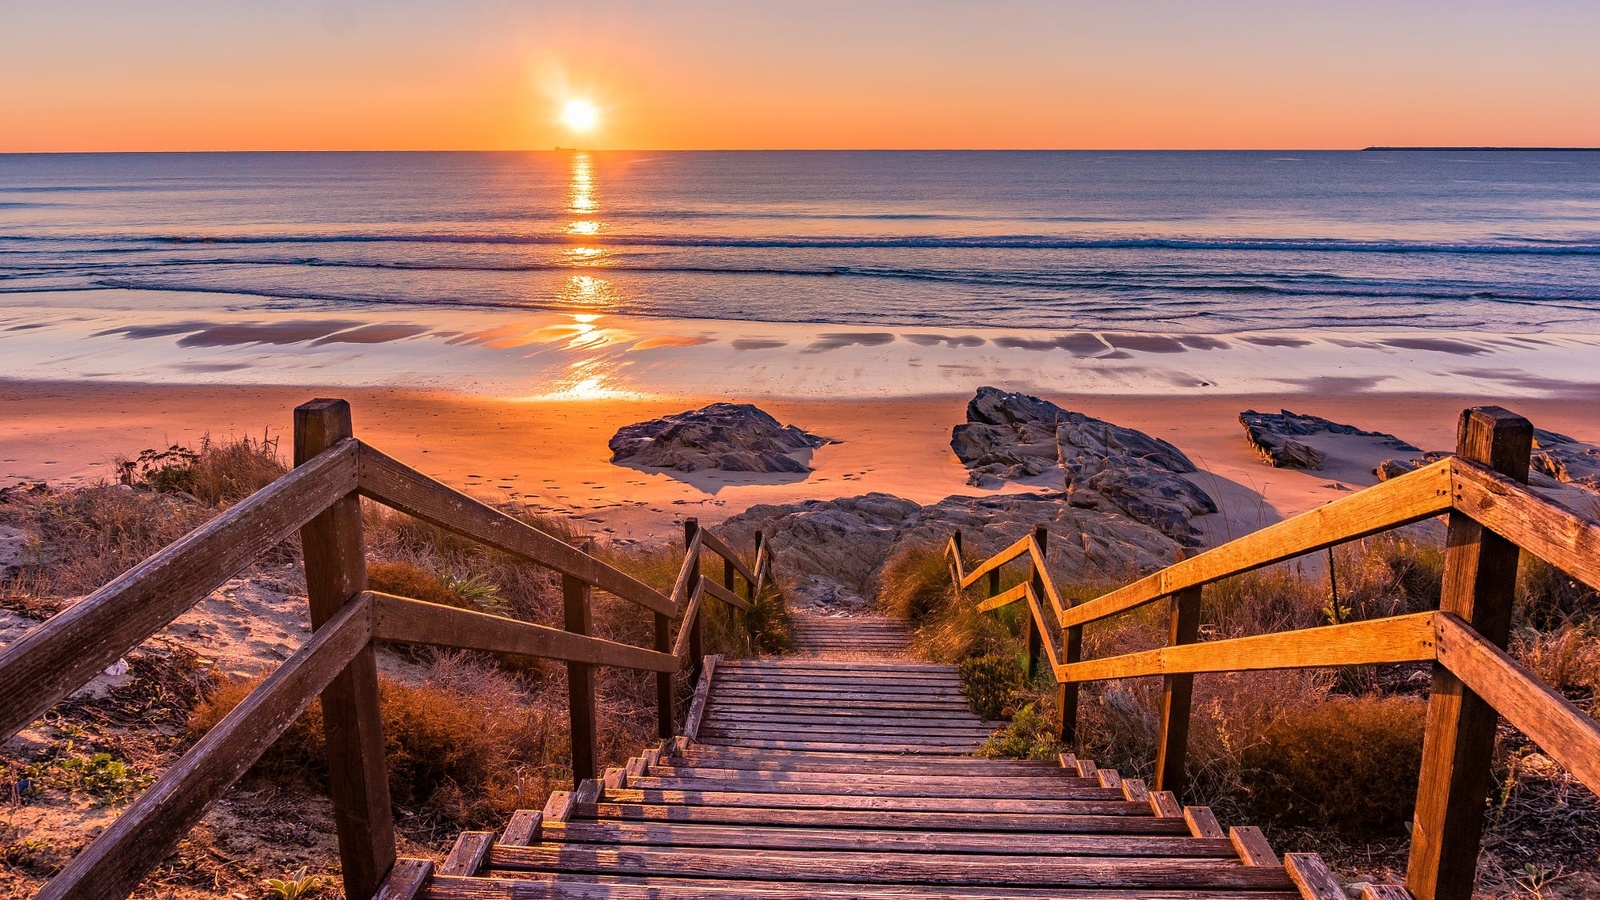 ladder, horizon, sea shore, sunset